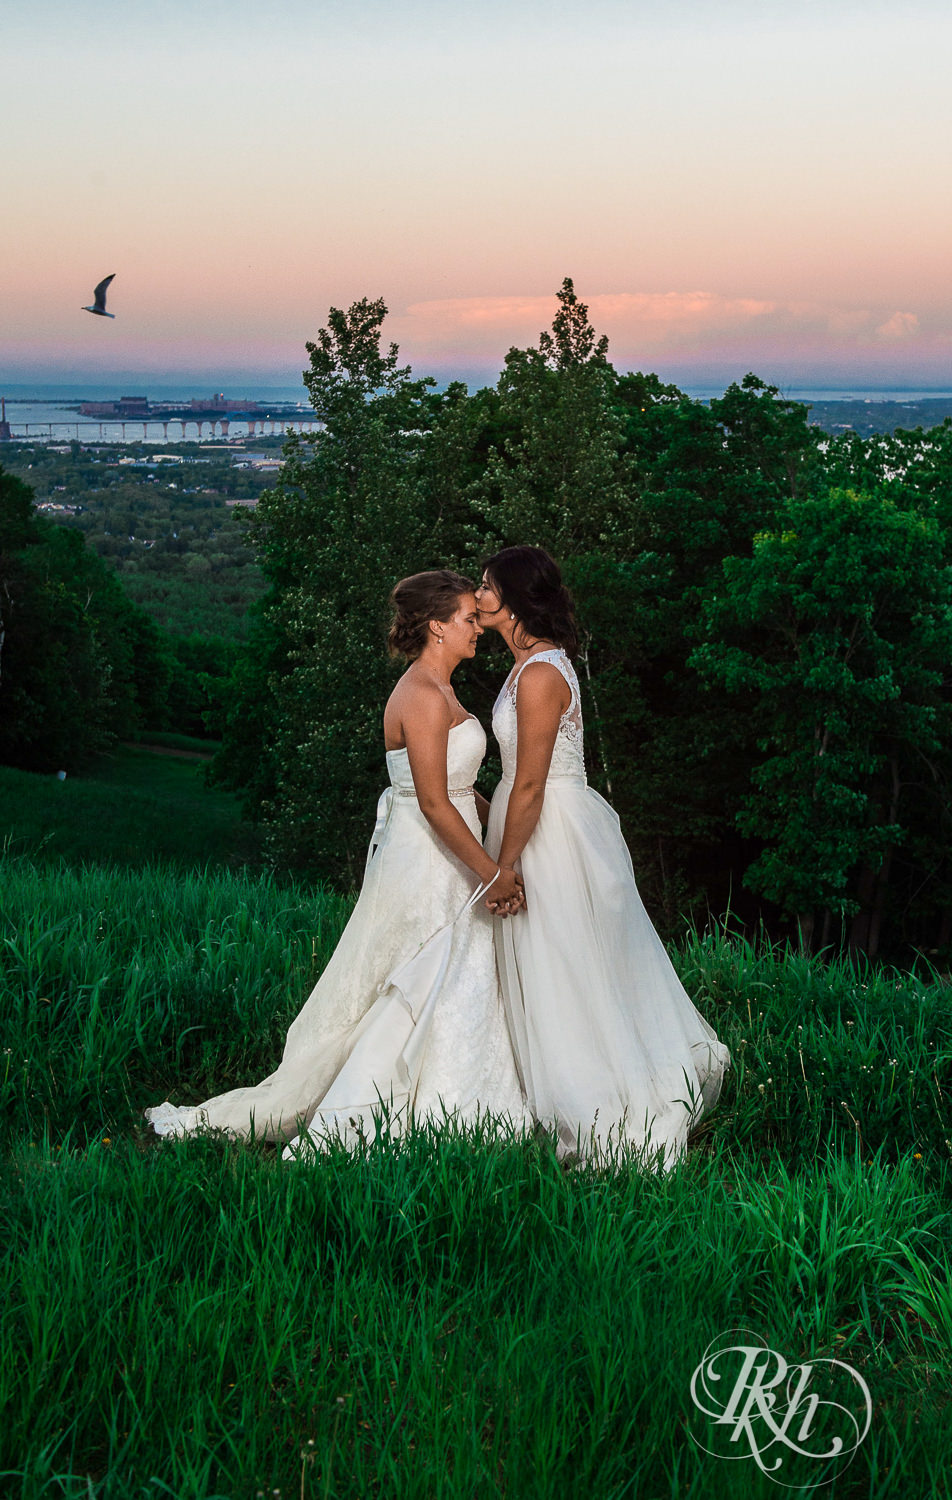 Lesbian brides kiss during sunset at Spirit Mountain in Duluth, Minnesota.